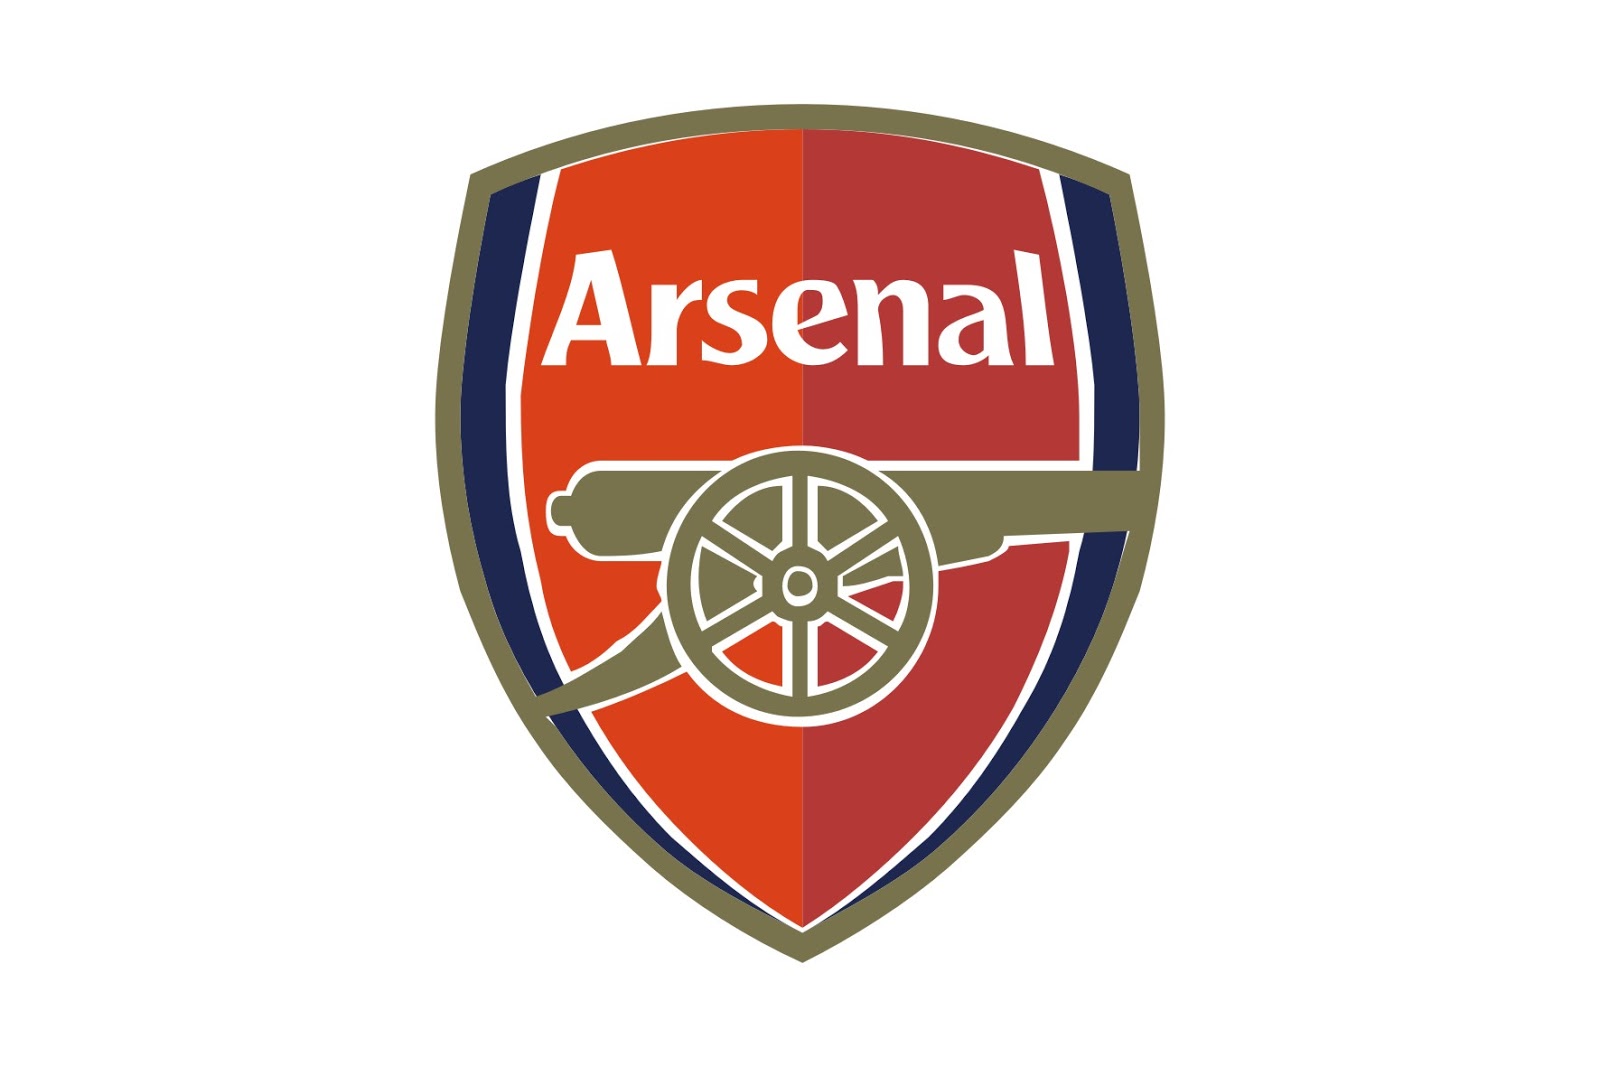 Arsenal Logo Large Image